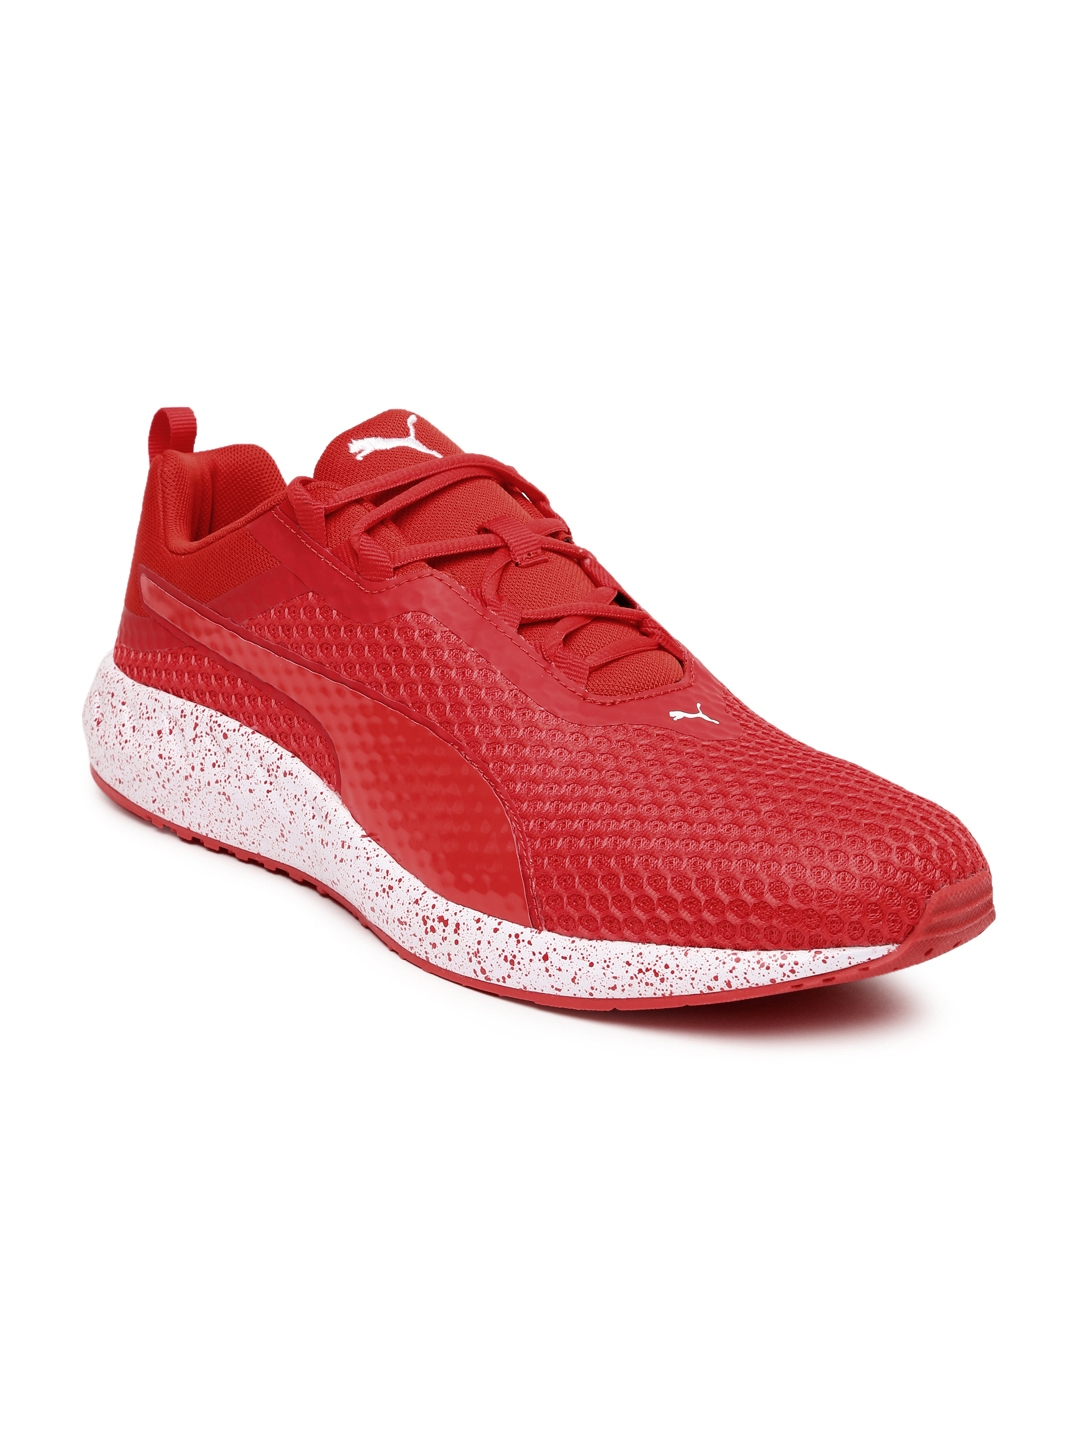 puma red shoes ferrari Sale,up to 62 